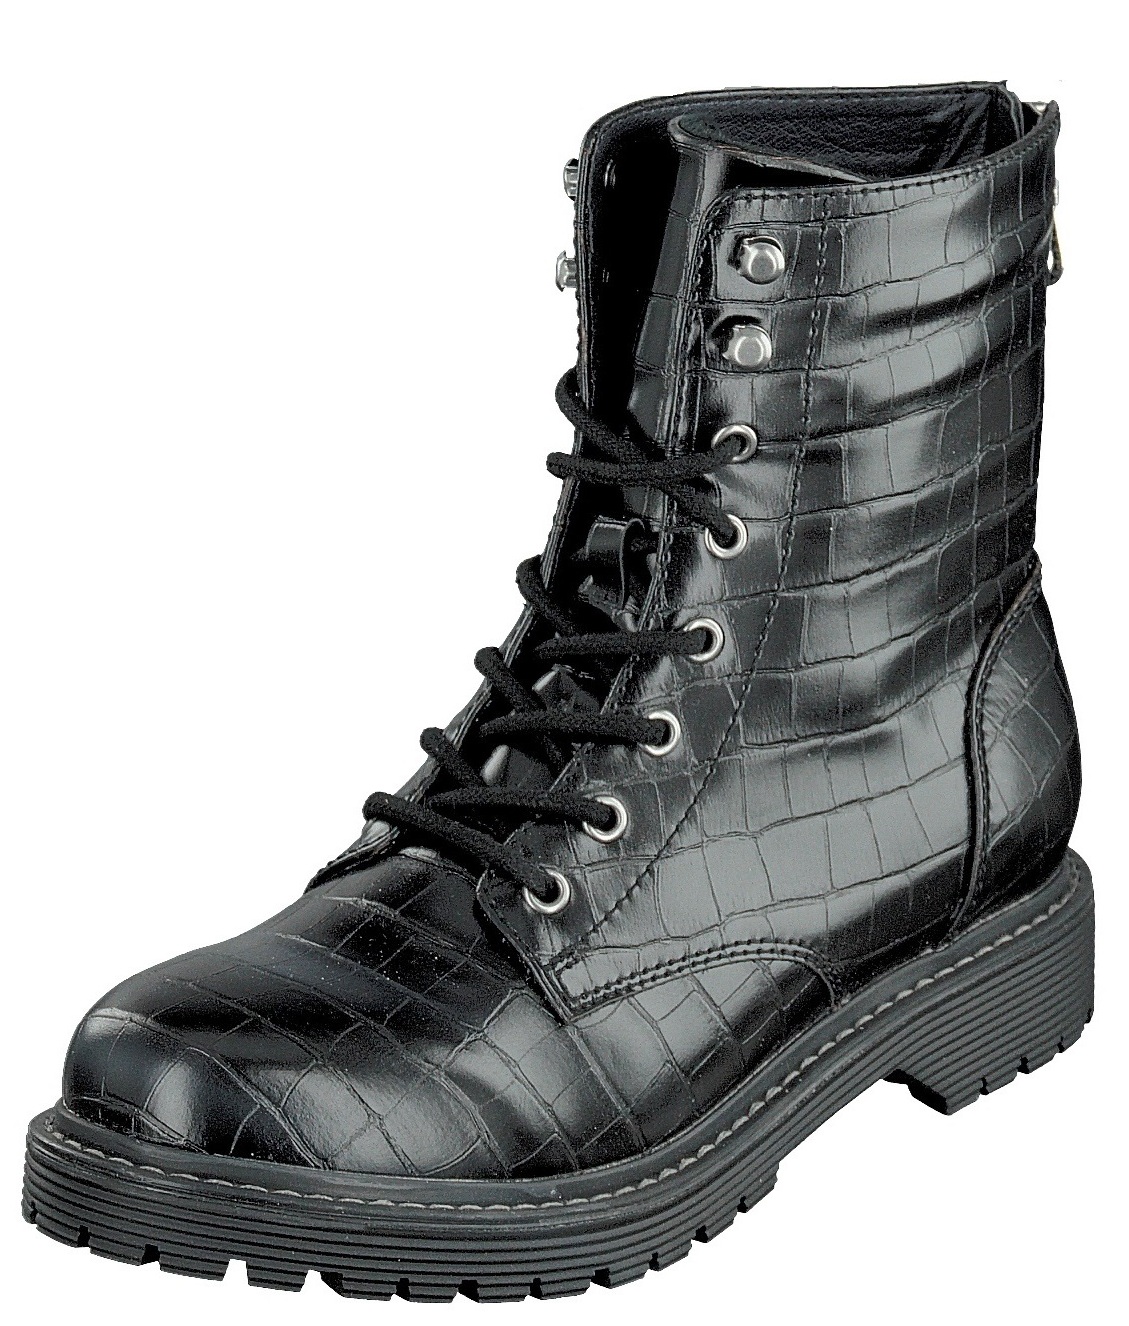 Jane Klain Damen Schuhe Boots Stiefel 252-449 Schwarz Reptil Reißverschluss